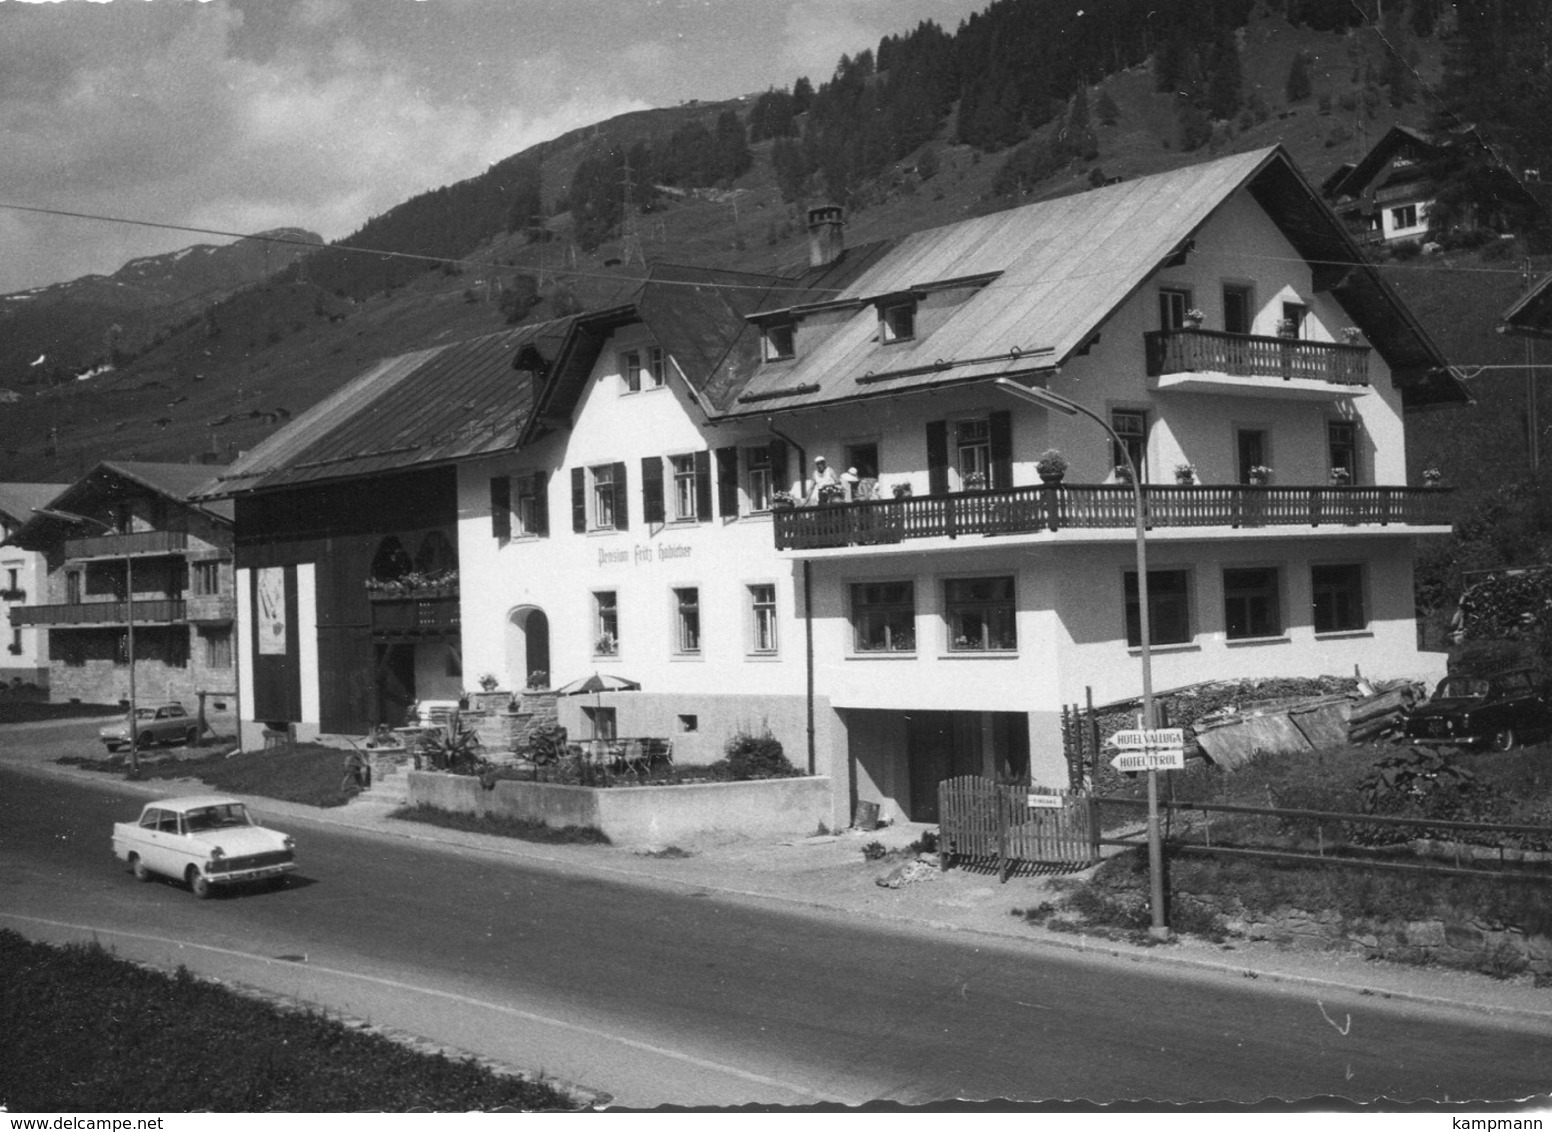 Opel Rekord P II,St. Anton/Arlberg,Pension "Habicher", Ungelaufen - Passenger Cars